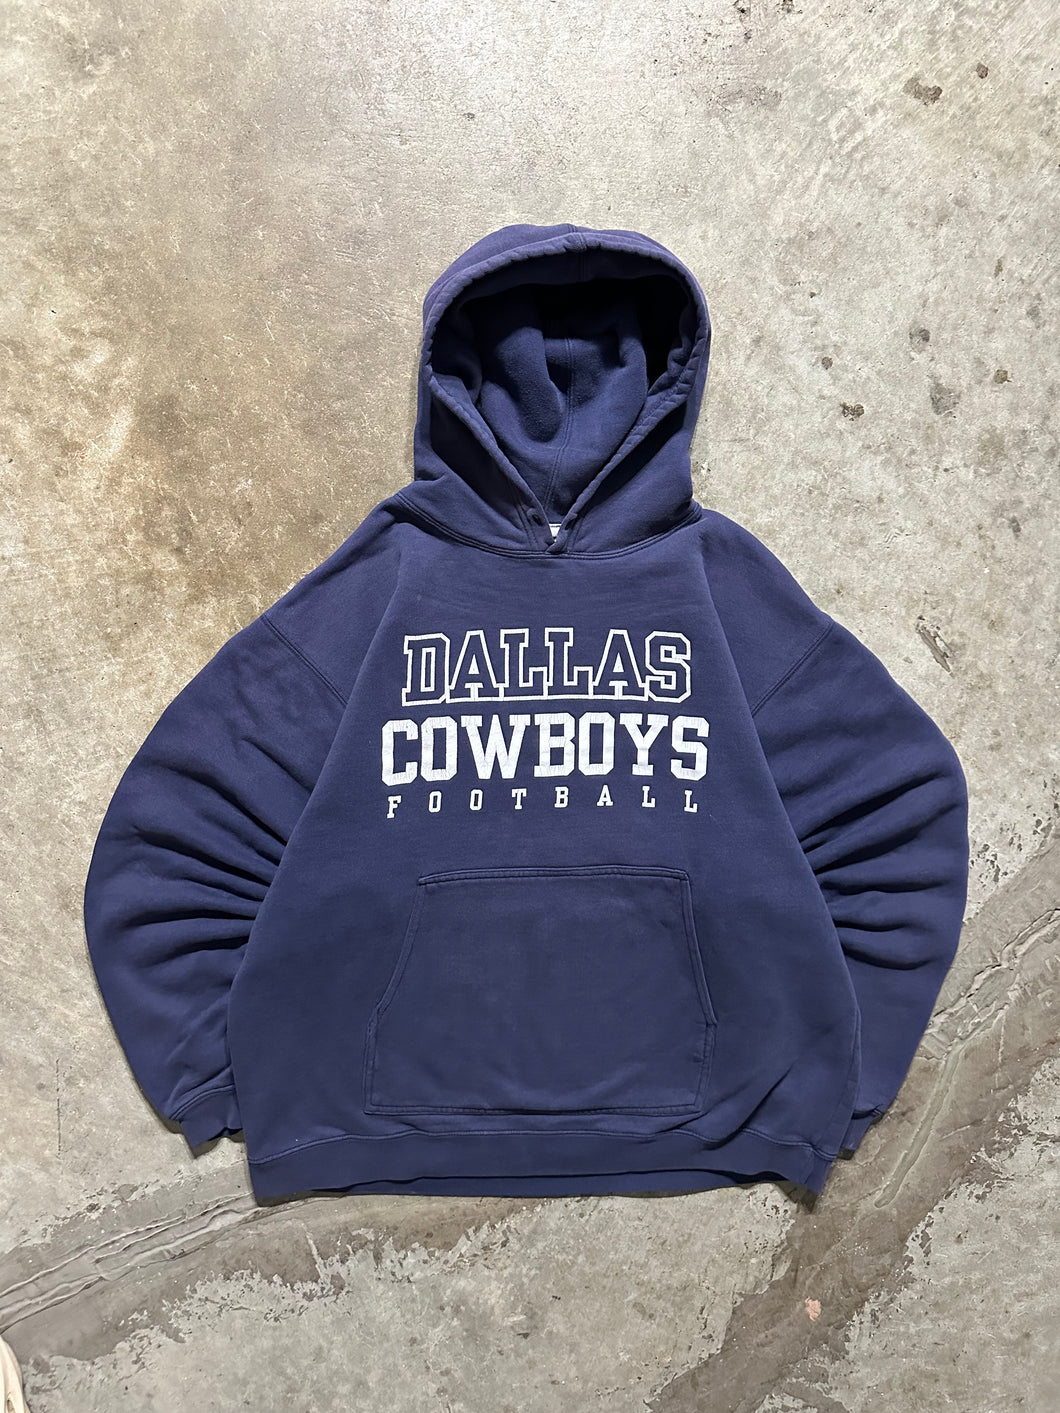 Vintage Dallas Cowboys Football Hoodie (XL)